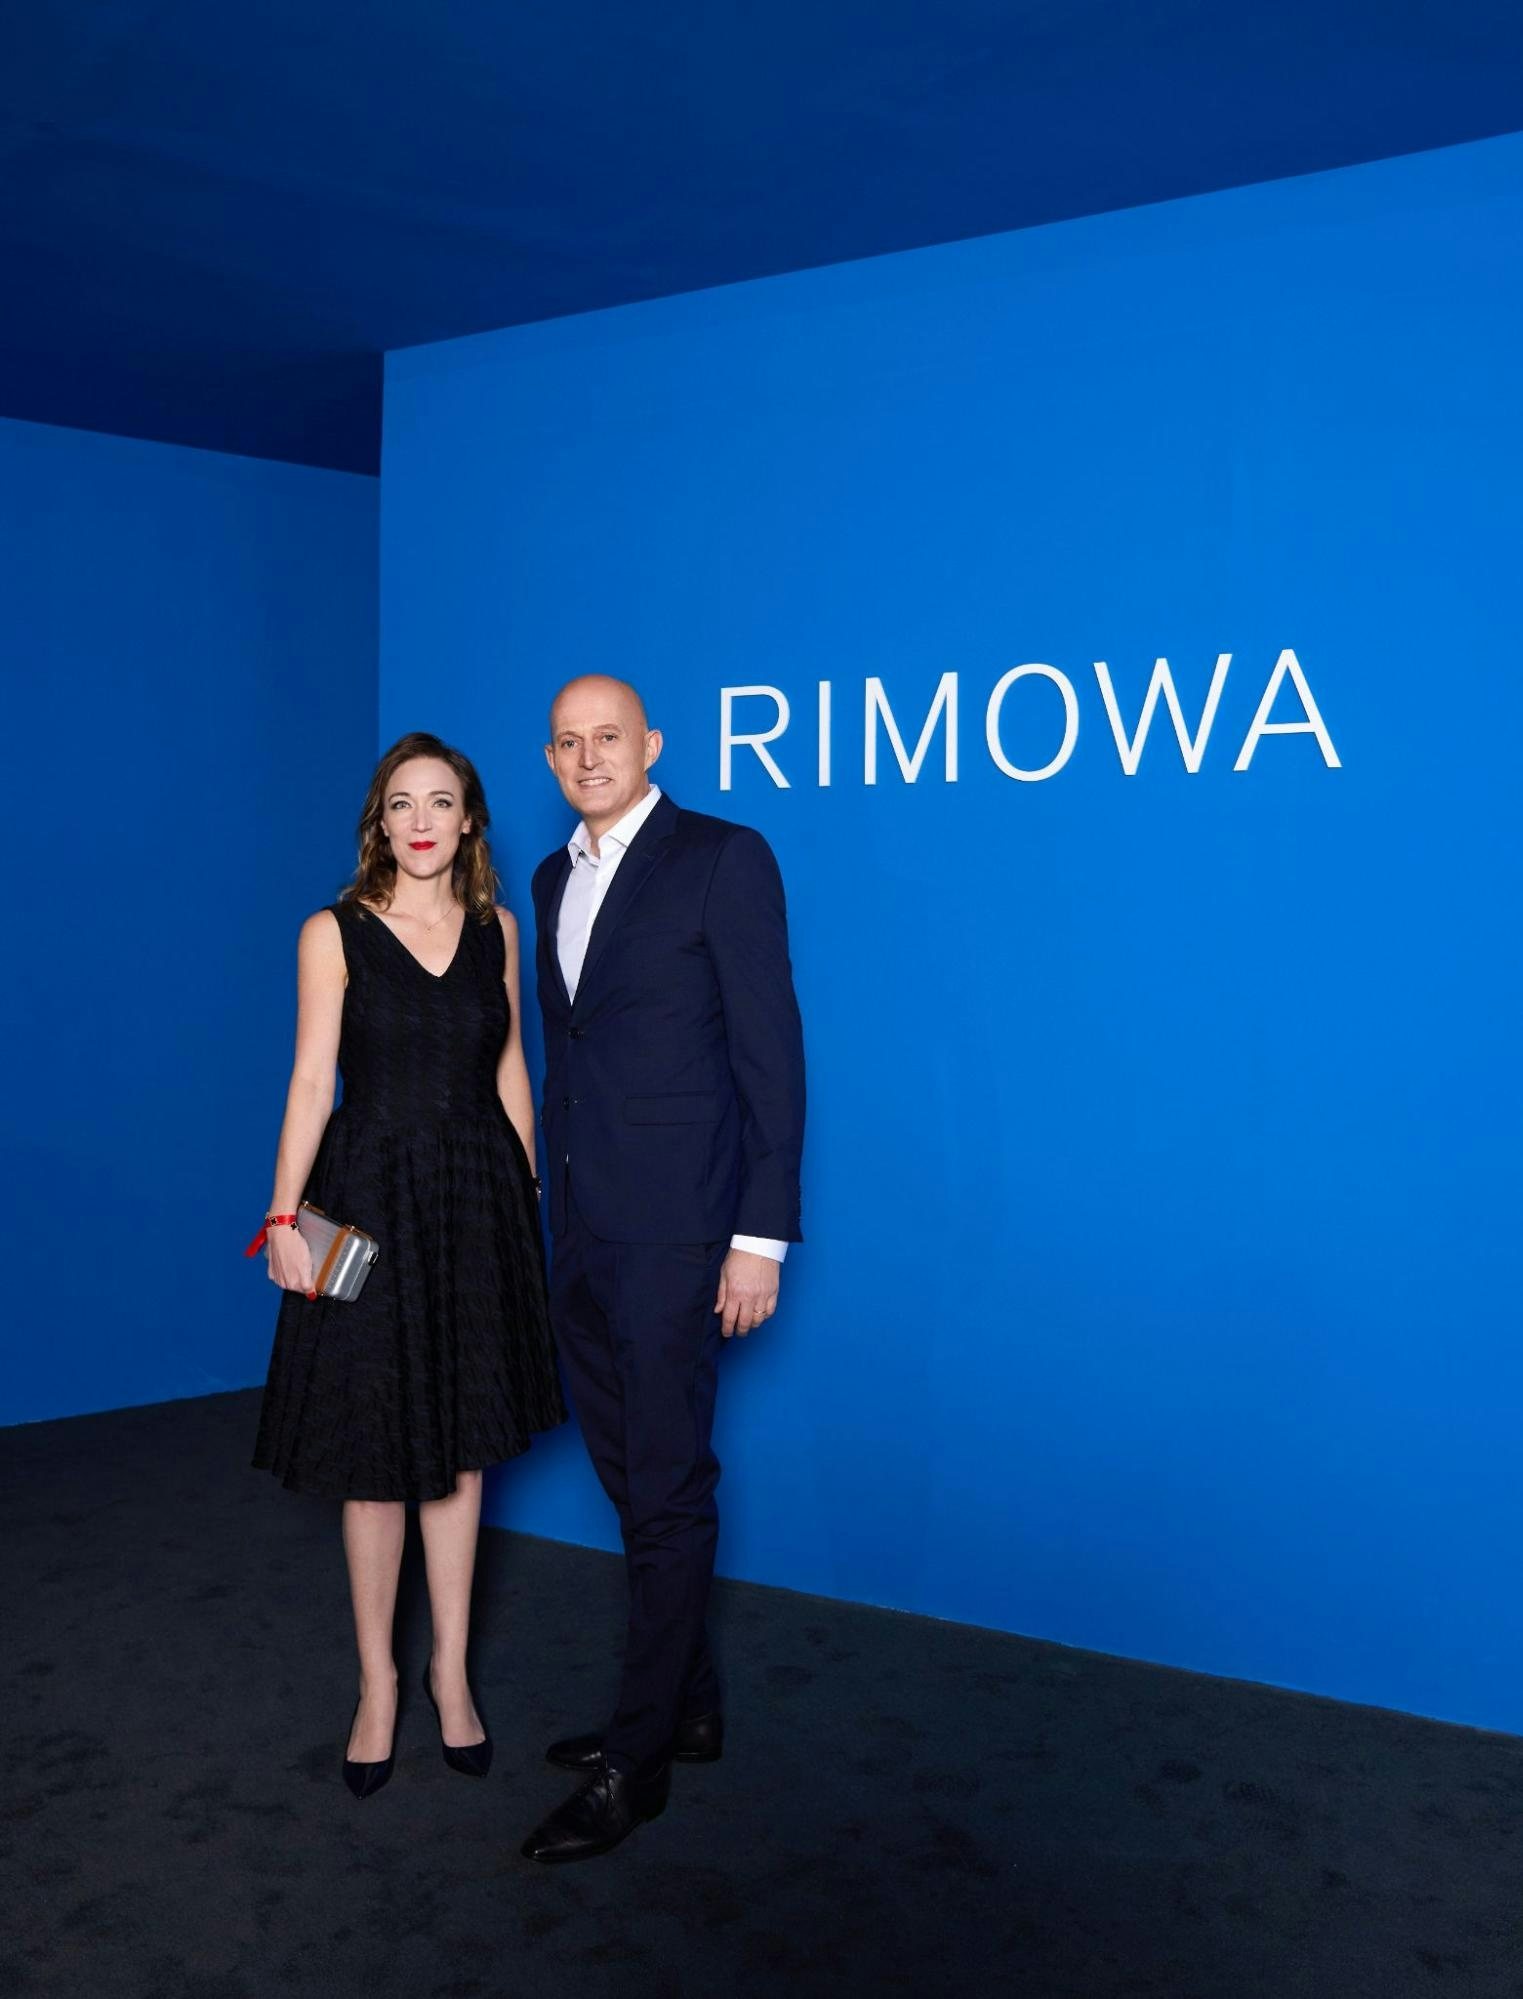 Hugues Bonnet-Masimbert, Rimowa CEO (right) and Emelie De Vitis, Rimowa SVP Marketing and Product (left). Photo: Rimowa
